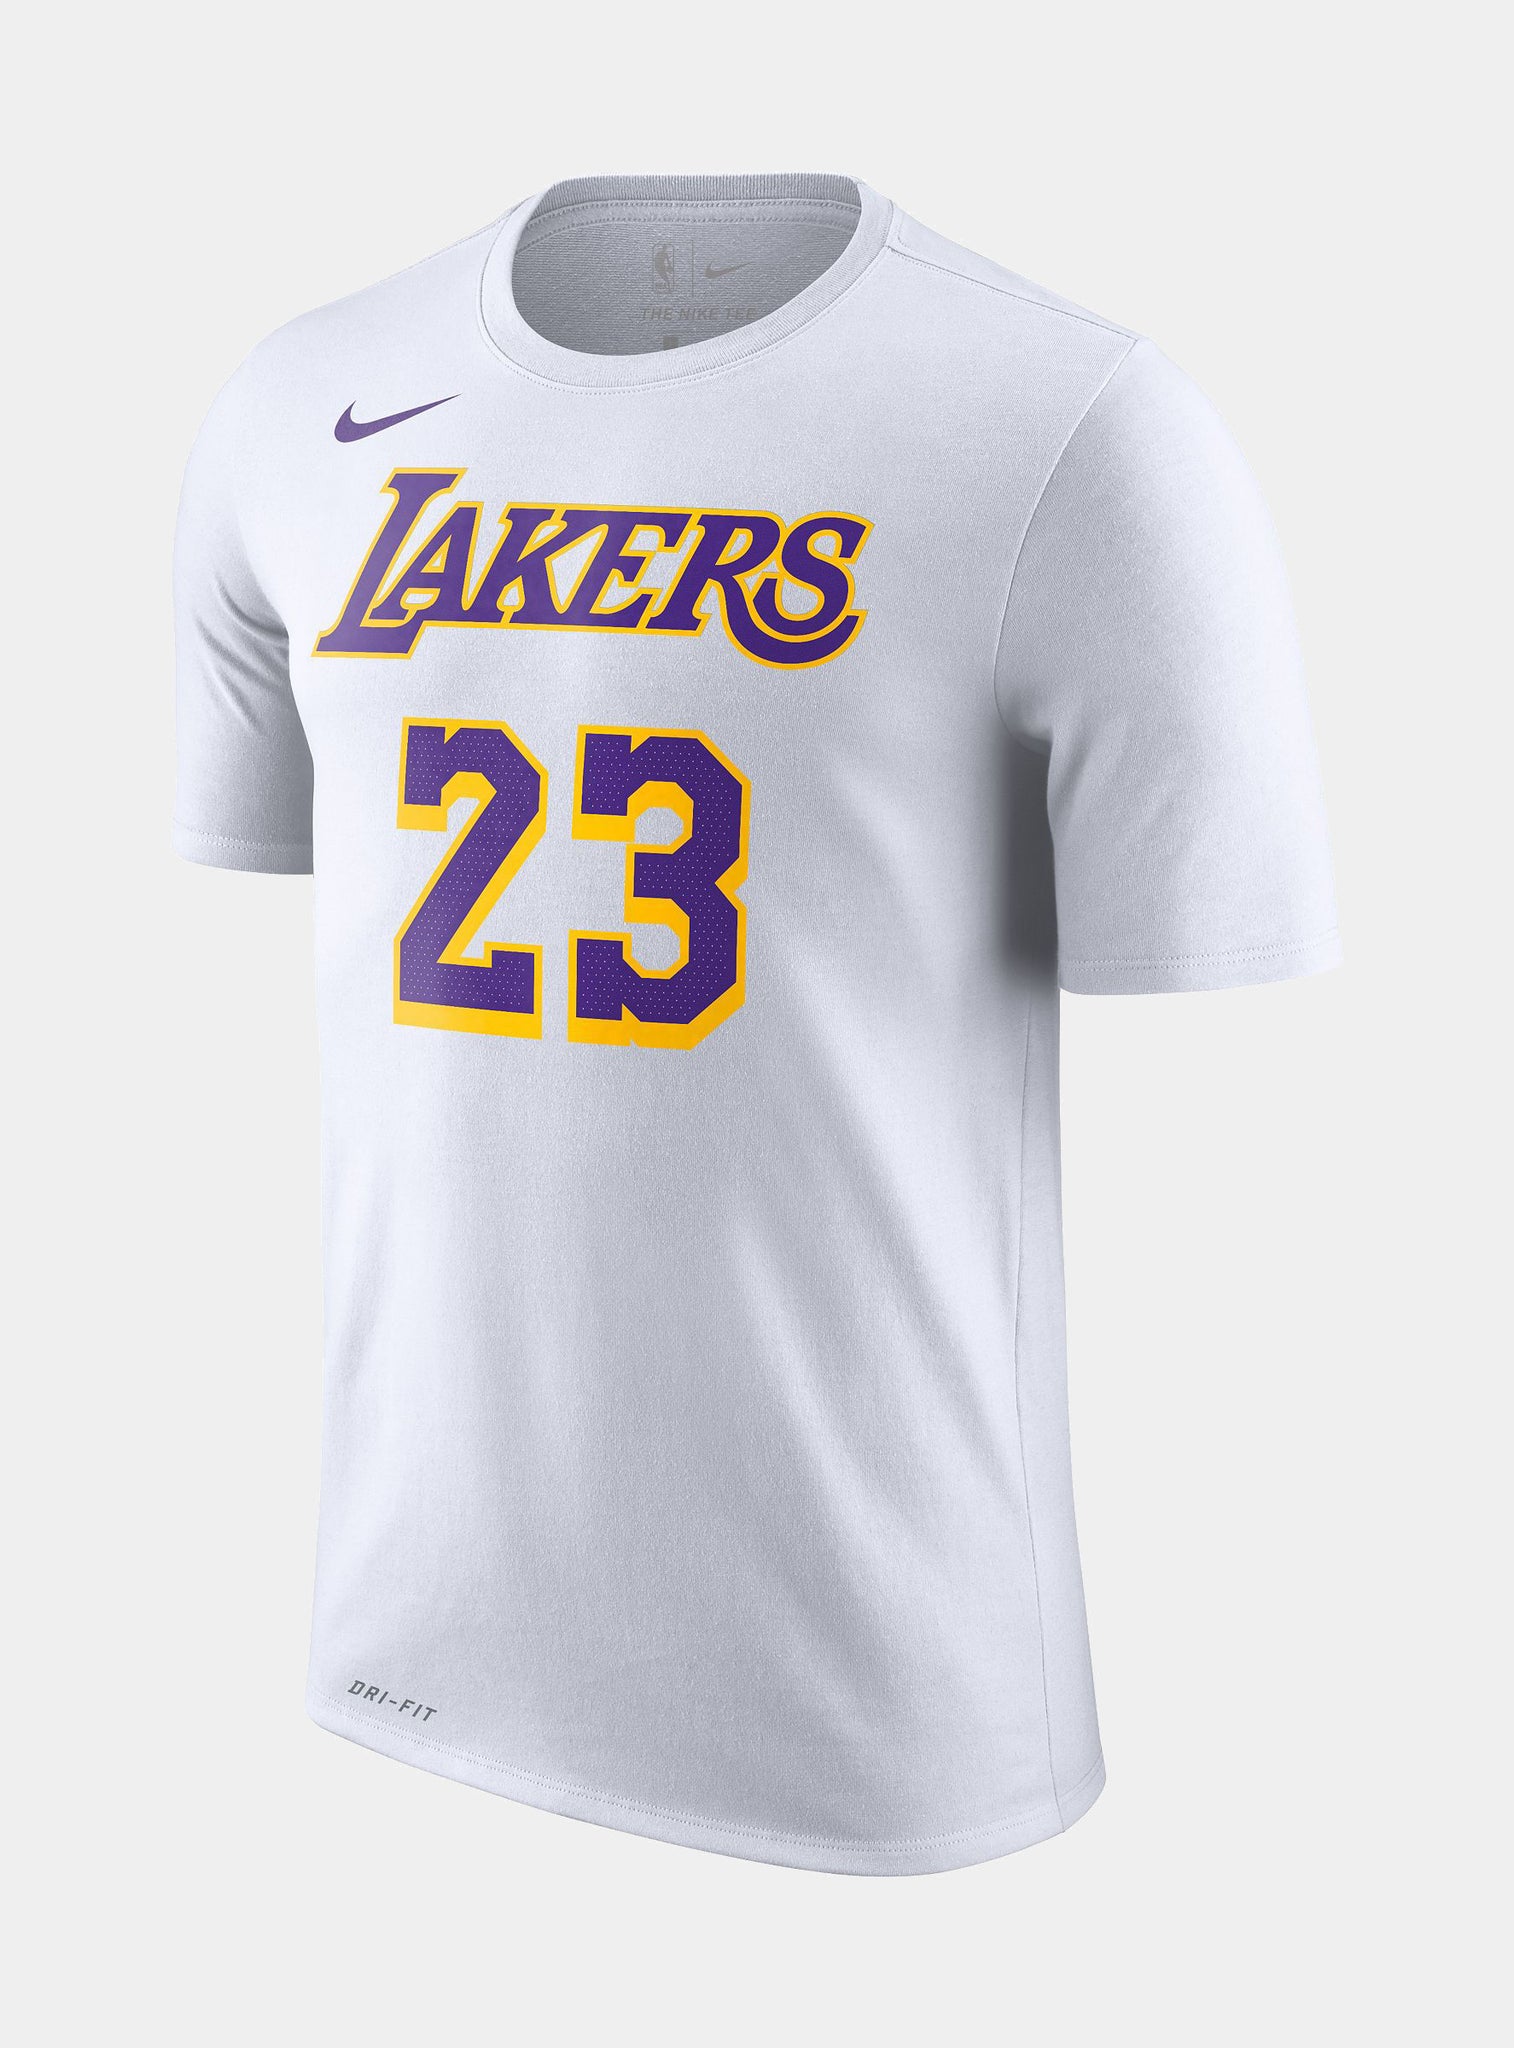 Nba Los Angeles Lakers T-shirt Lebron James #23 Basketball Jersey